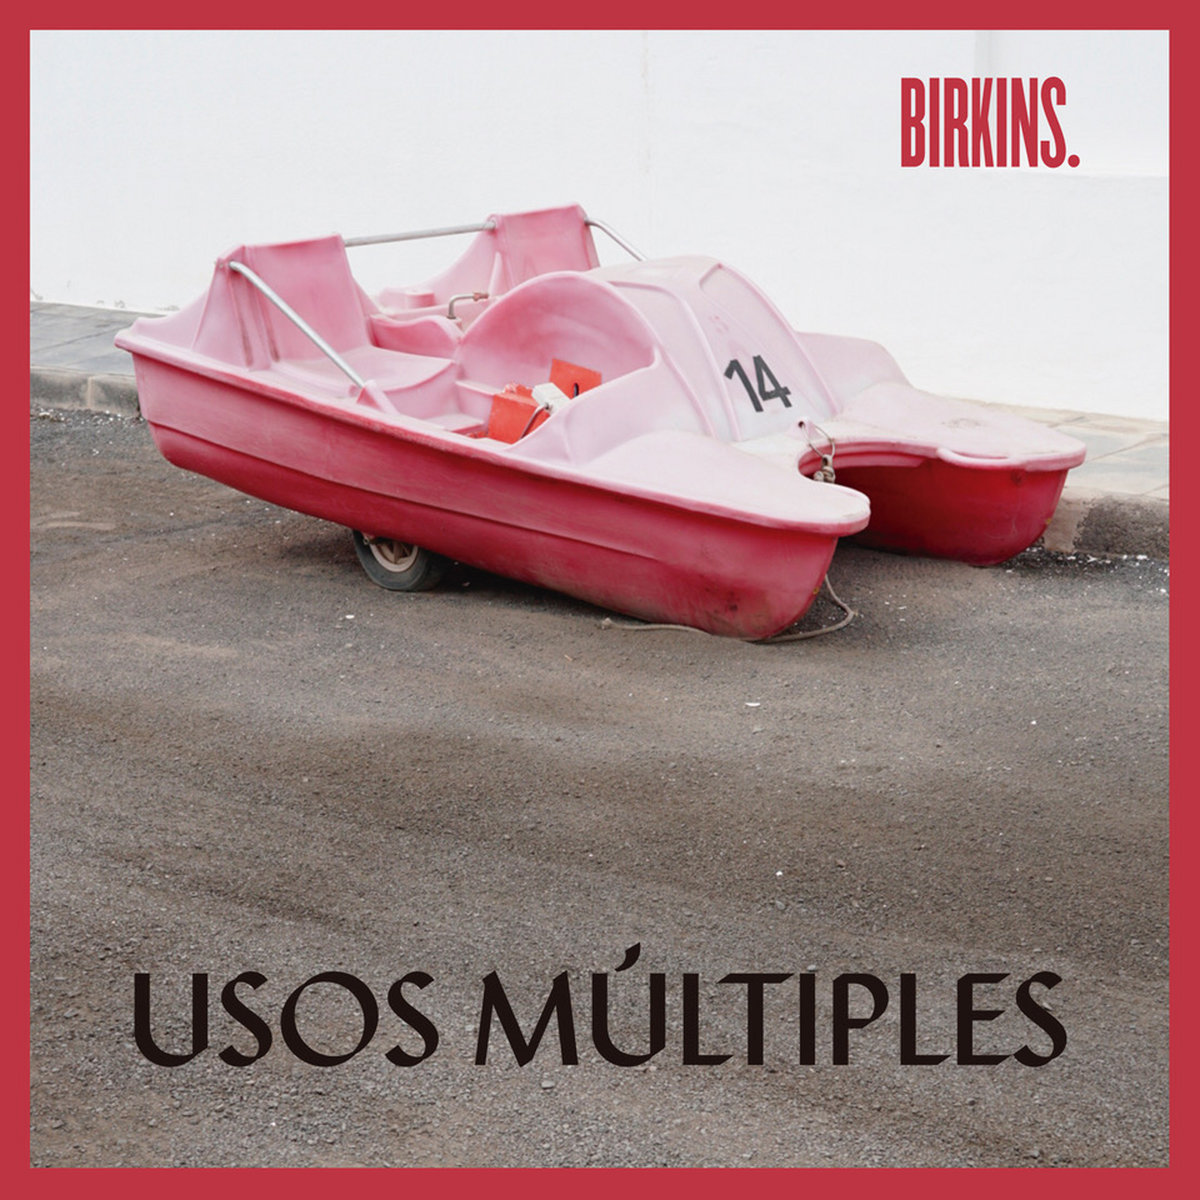 Birkins "Usos múltiples" LP